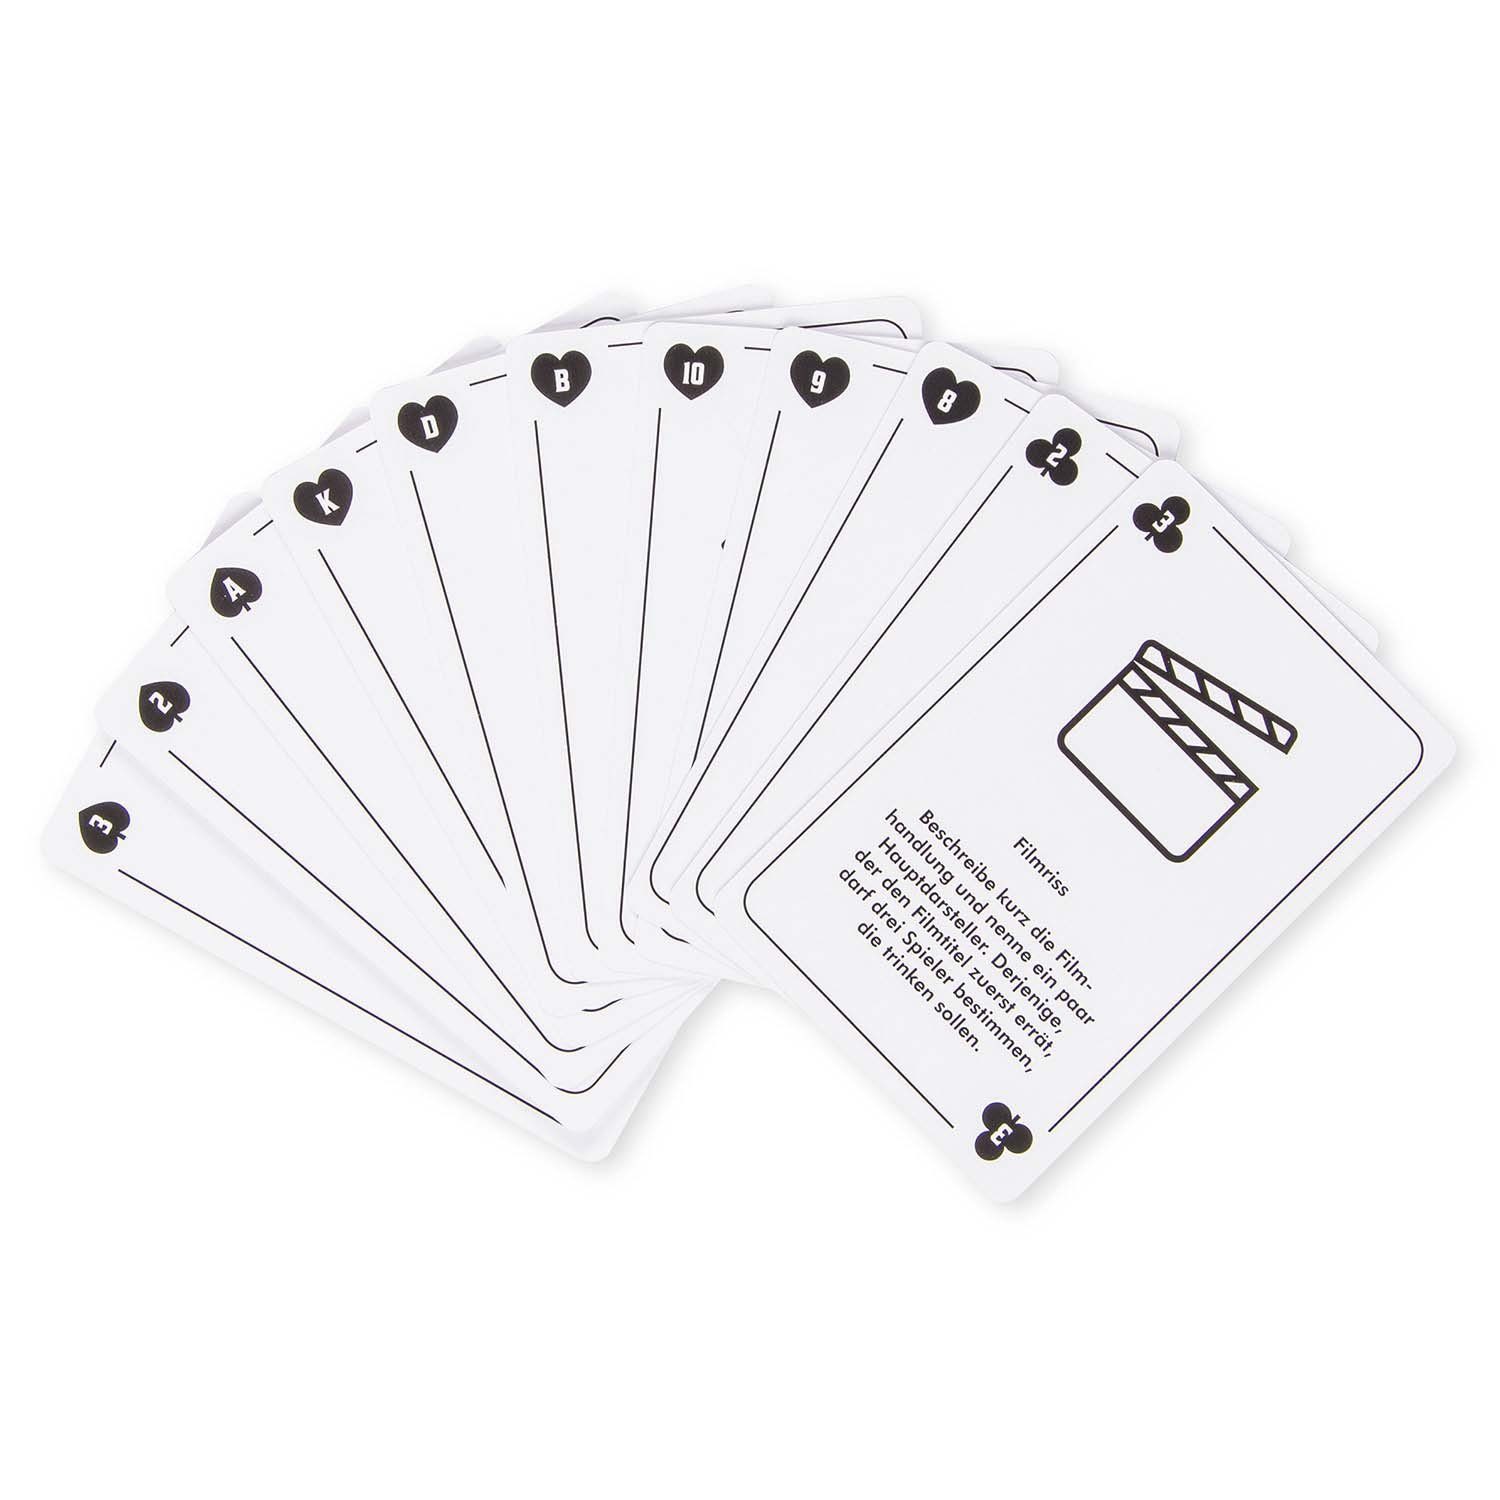 Kartenspiel, Kings Party-Spiel Spiel, 52 Goods+Gadgets Cup mit 2.0 Version Karten